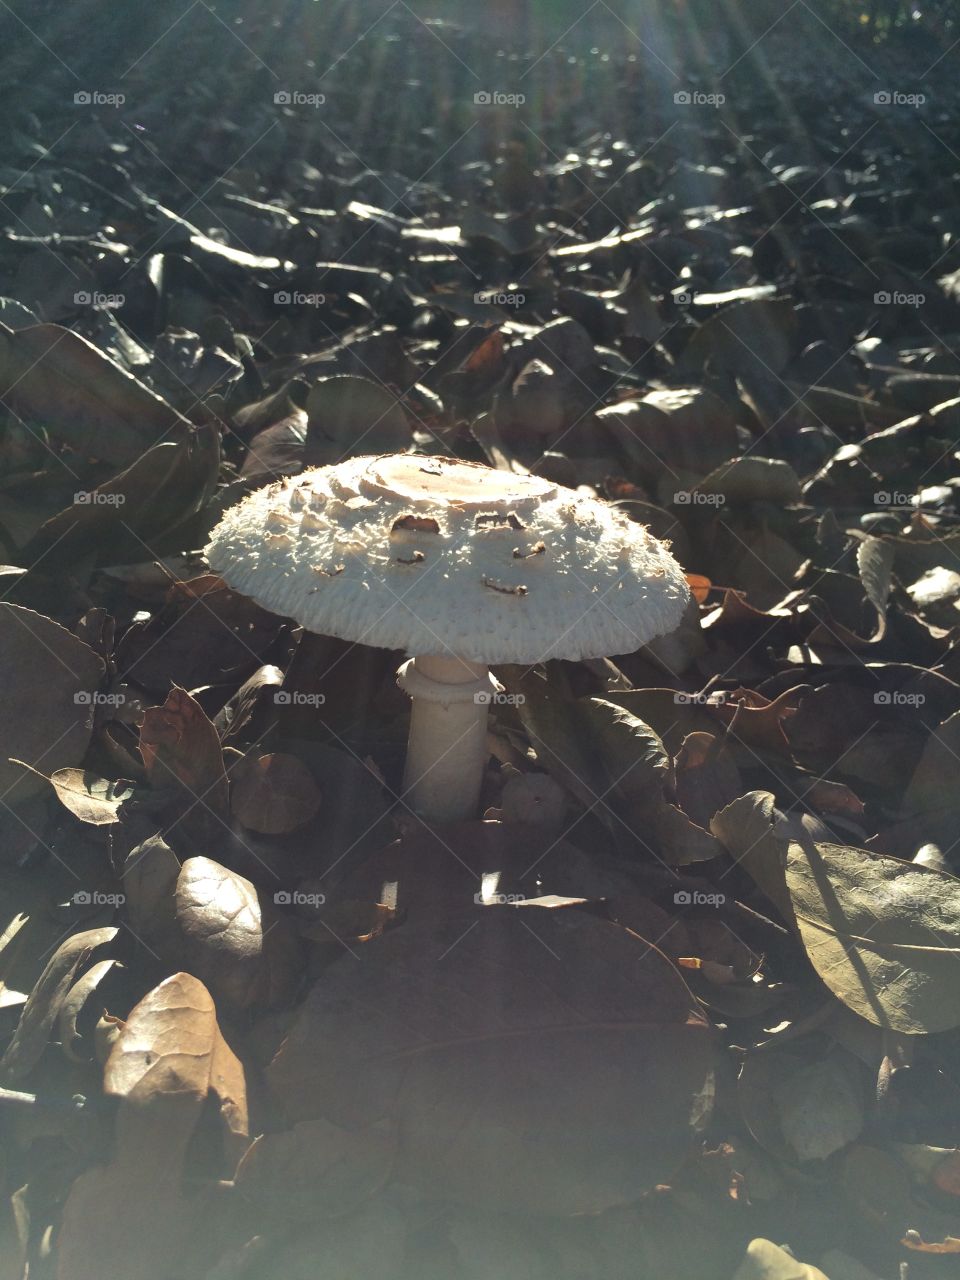 Shaggy parasol mushroom 